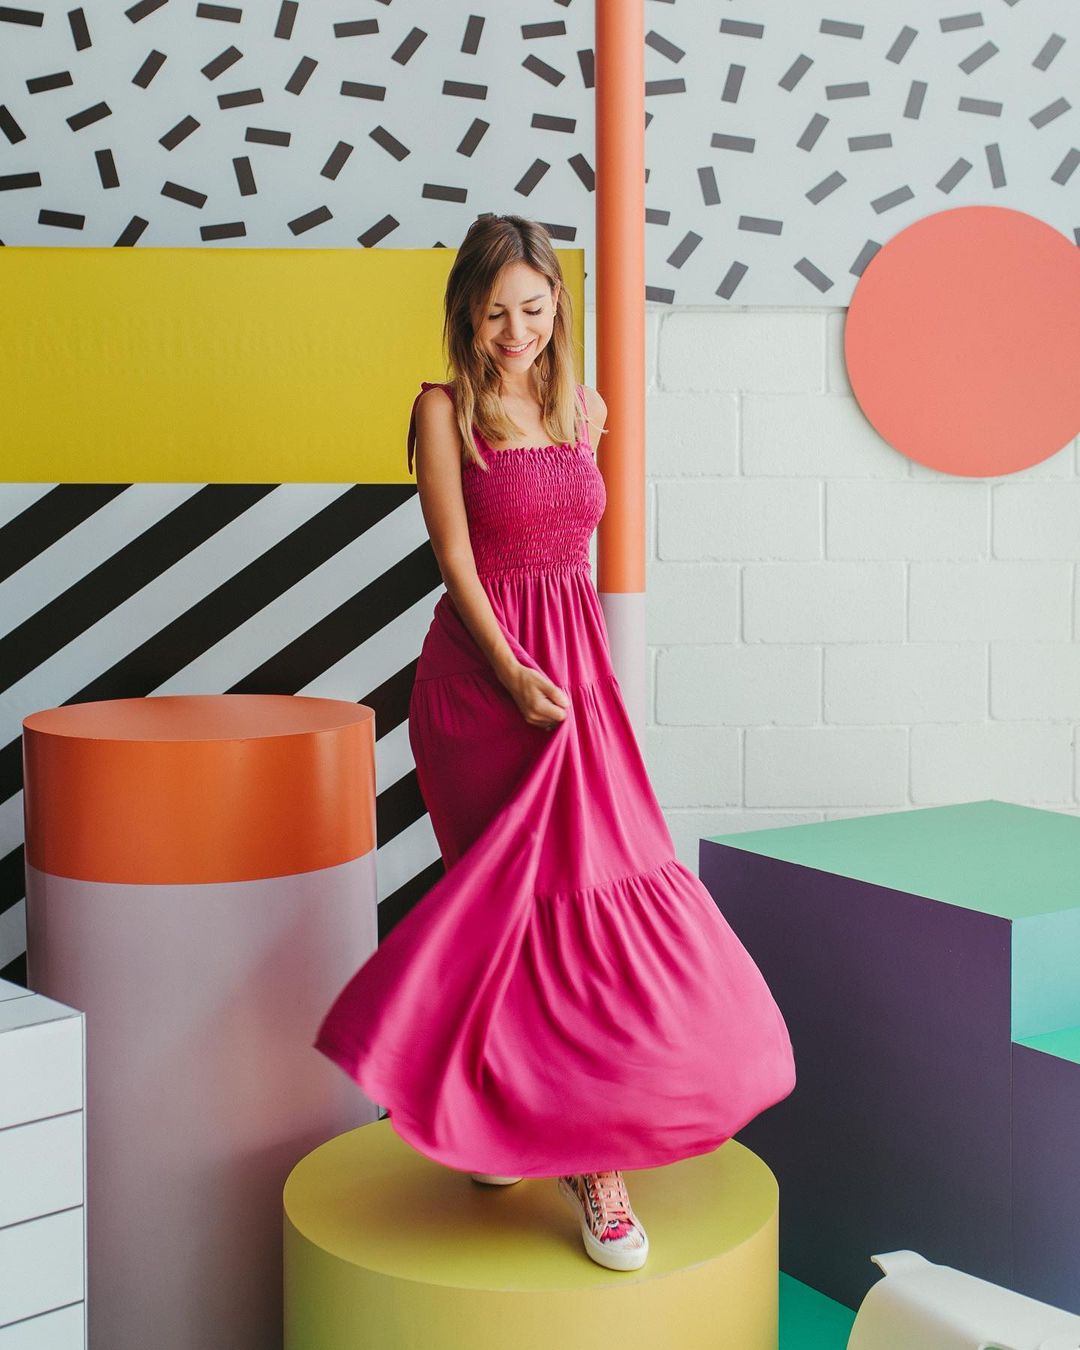 40 modelos de vestidos rosas para un look que no pasa desapercibido